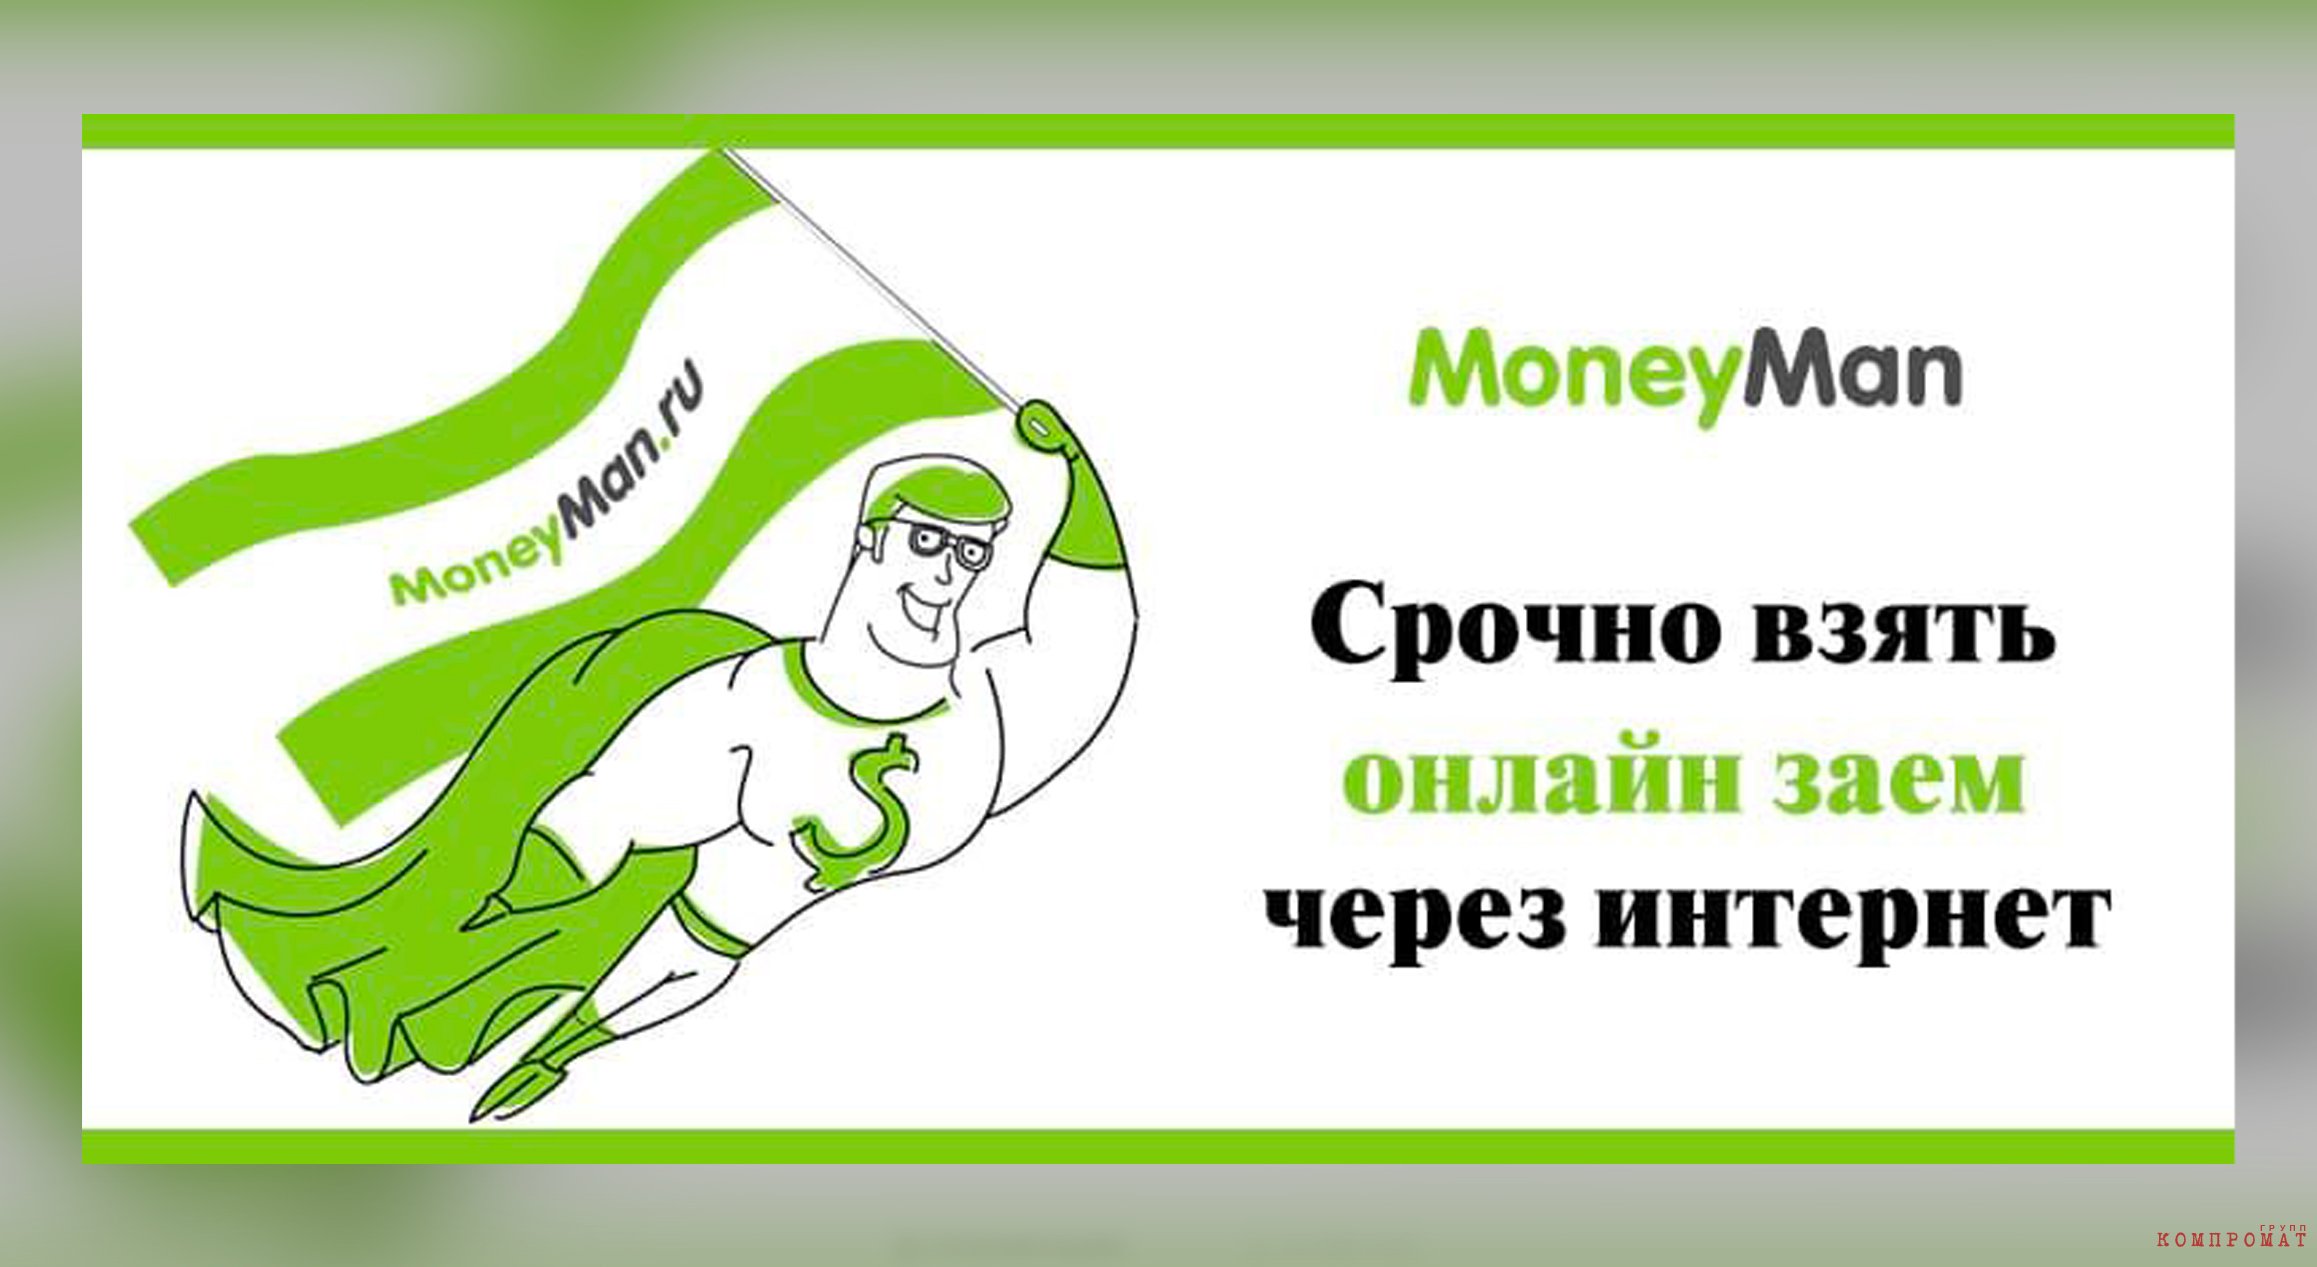  MoneyMan —   ,  ,  qhidqxidezixtglv